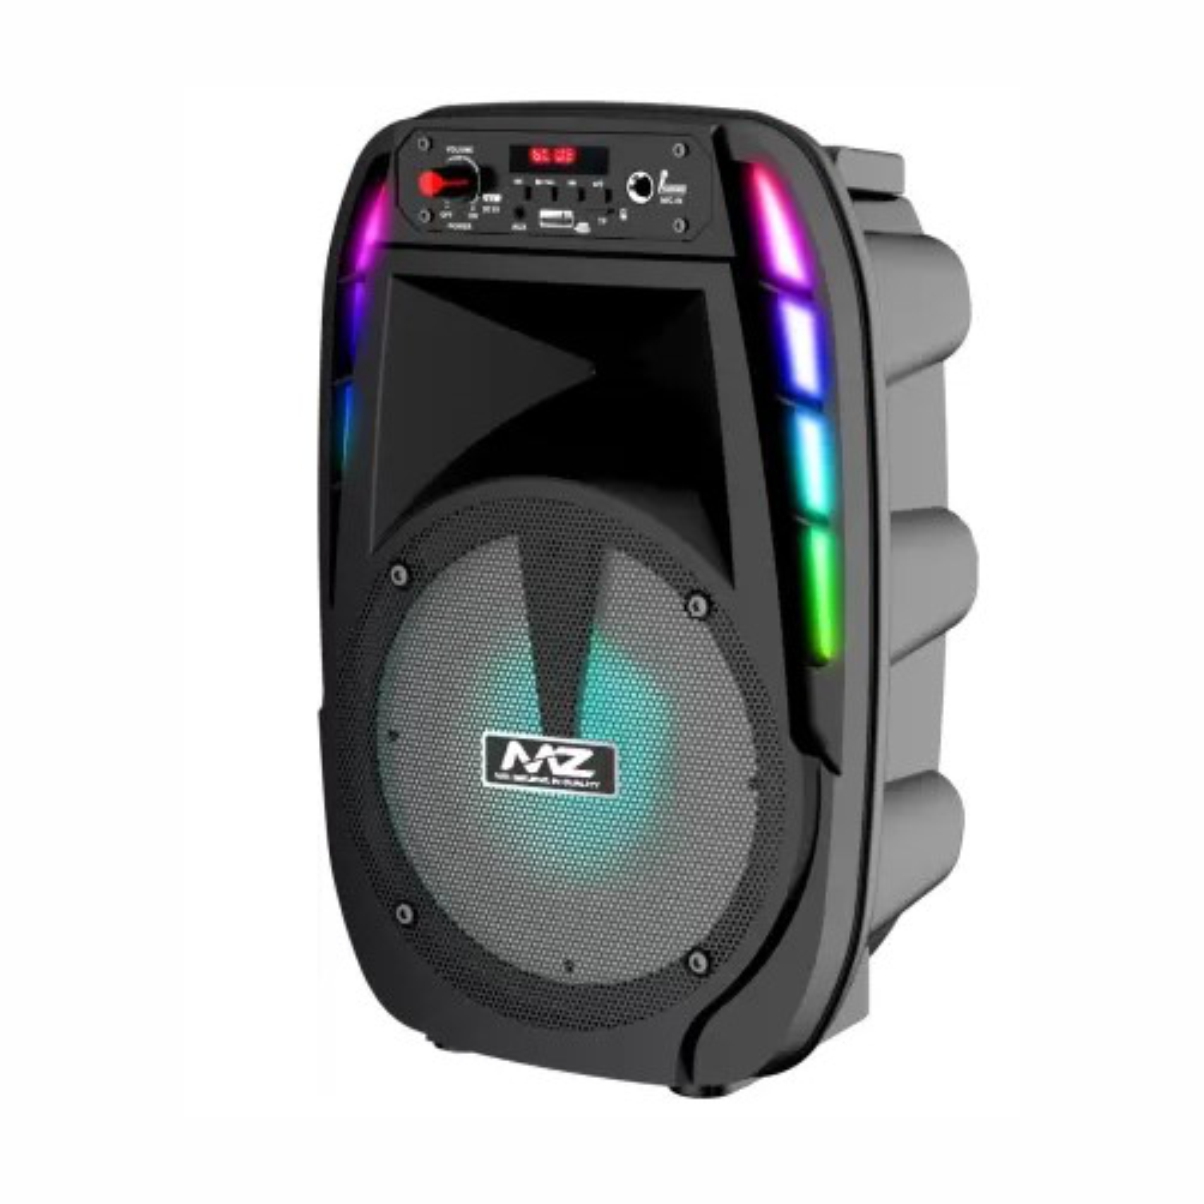 MZ M304 Dynamic Thunder Sound With Karaoke Mic 6.5 Inch 10 W Bluetooth Party Speaker (Multicolor, Stereo Channel) (PORTABLE KAROAKE SPEAKER)